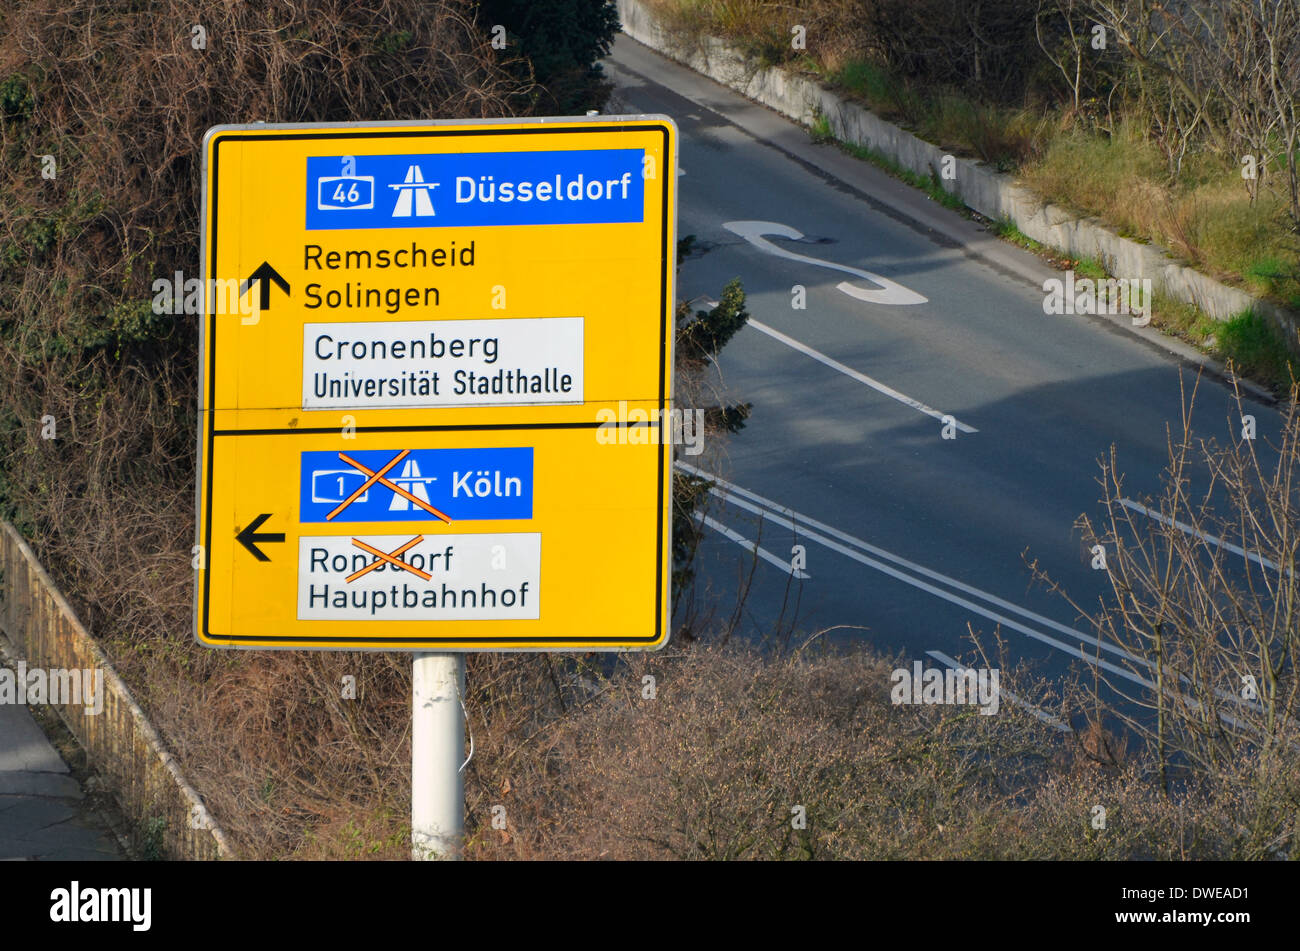 Road sign in Wuppertal showing closed motorway junction. Verkehrsschild in Wuppertal zeigt geschlossen Gänge an die Autobahn. Stock Photo